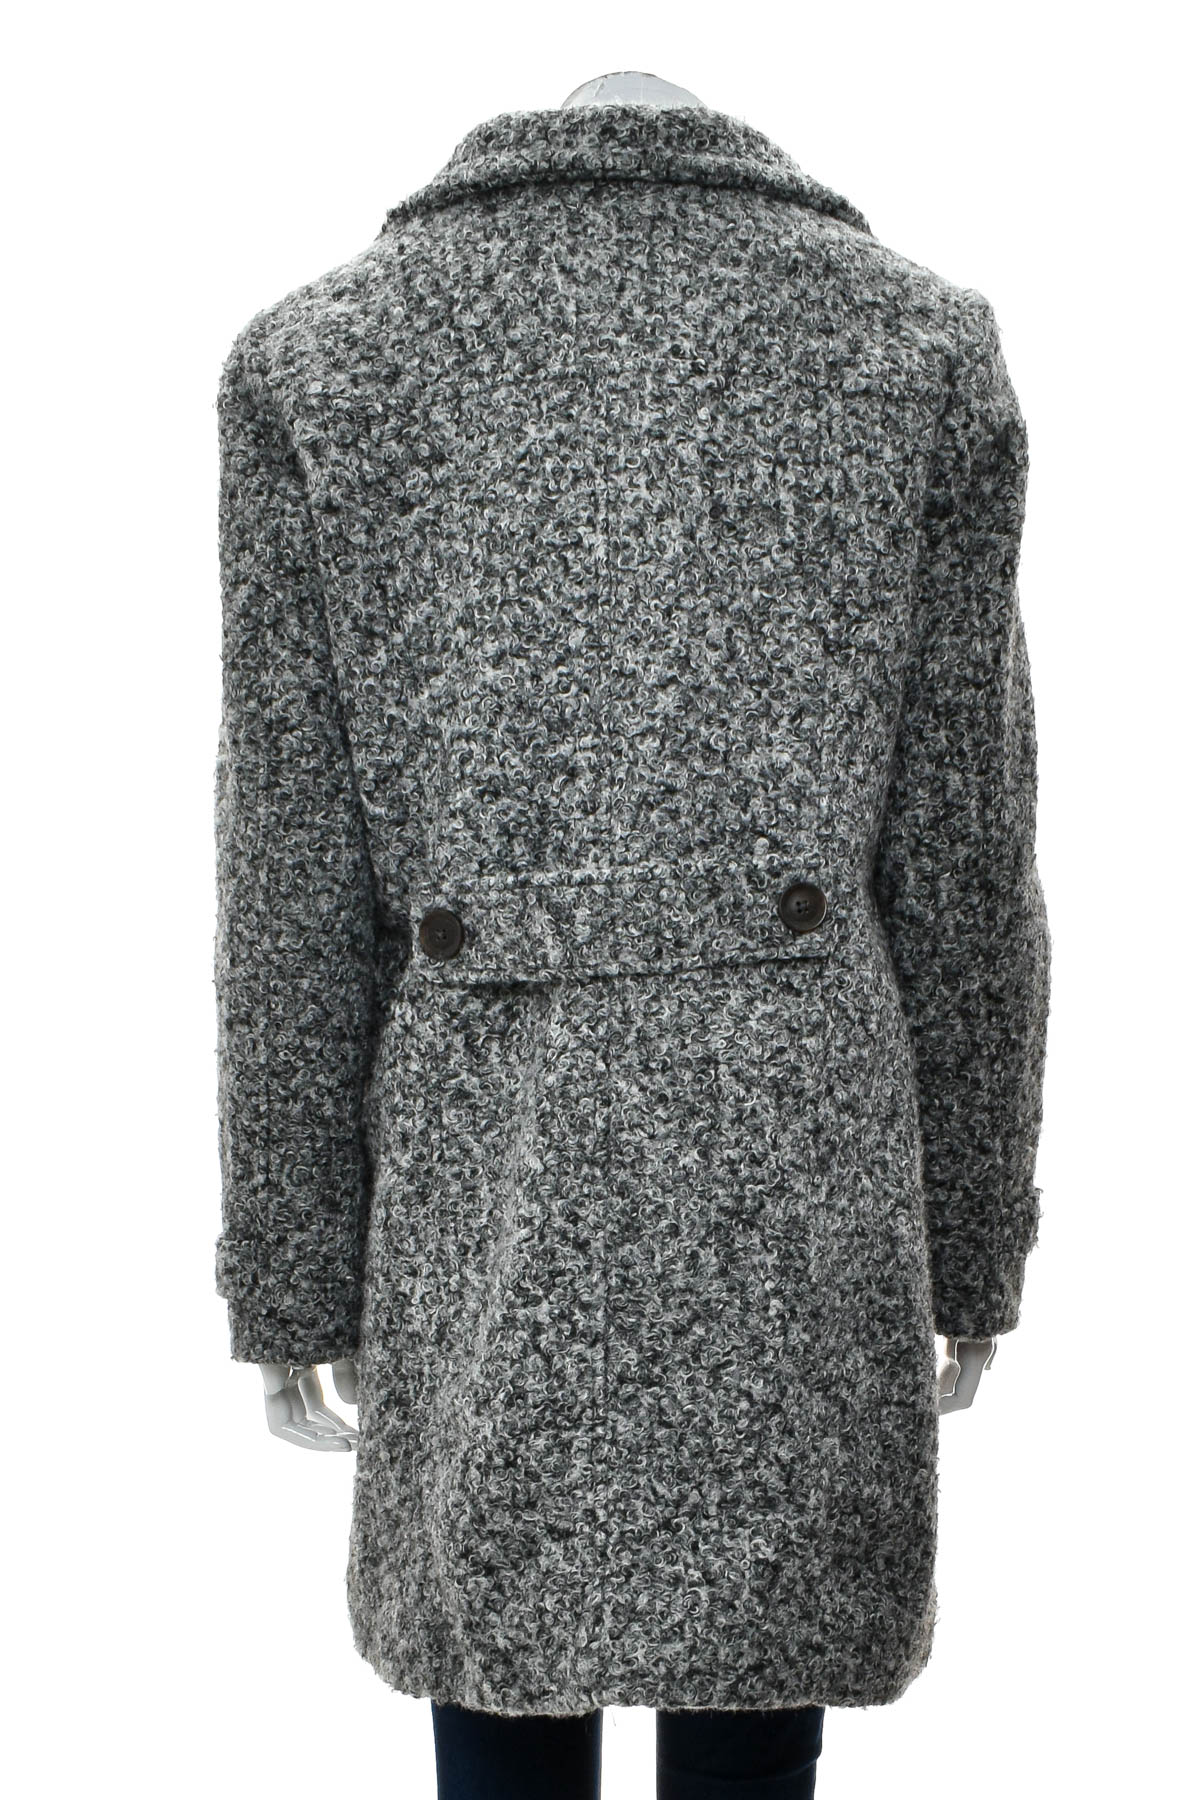 Women's coat - Jean Pascale - 1